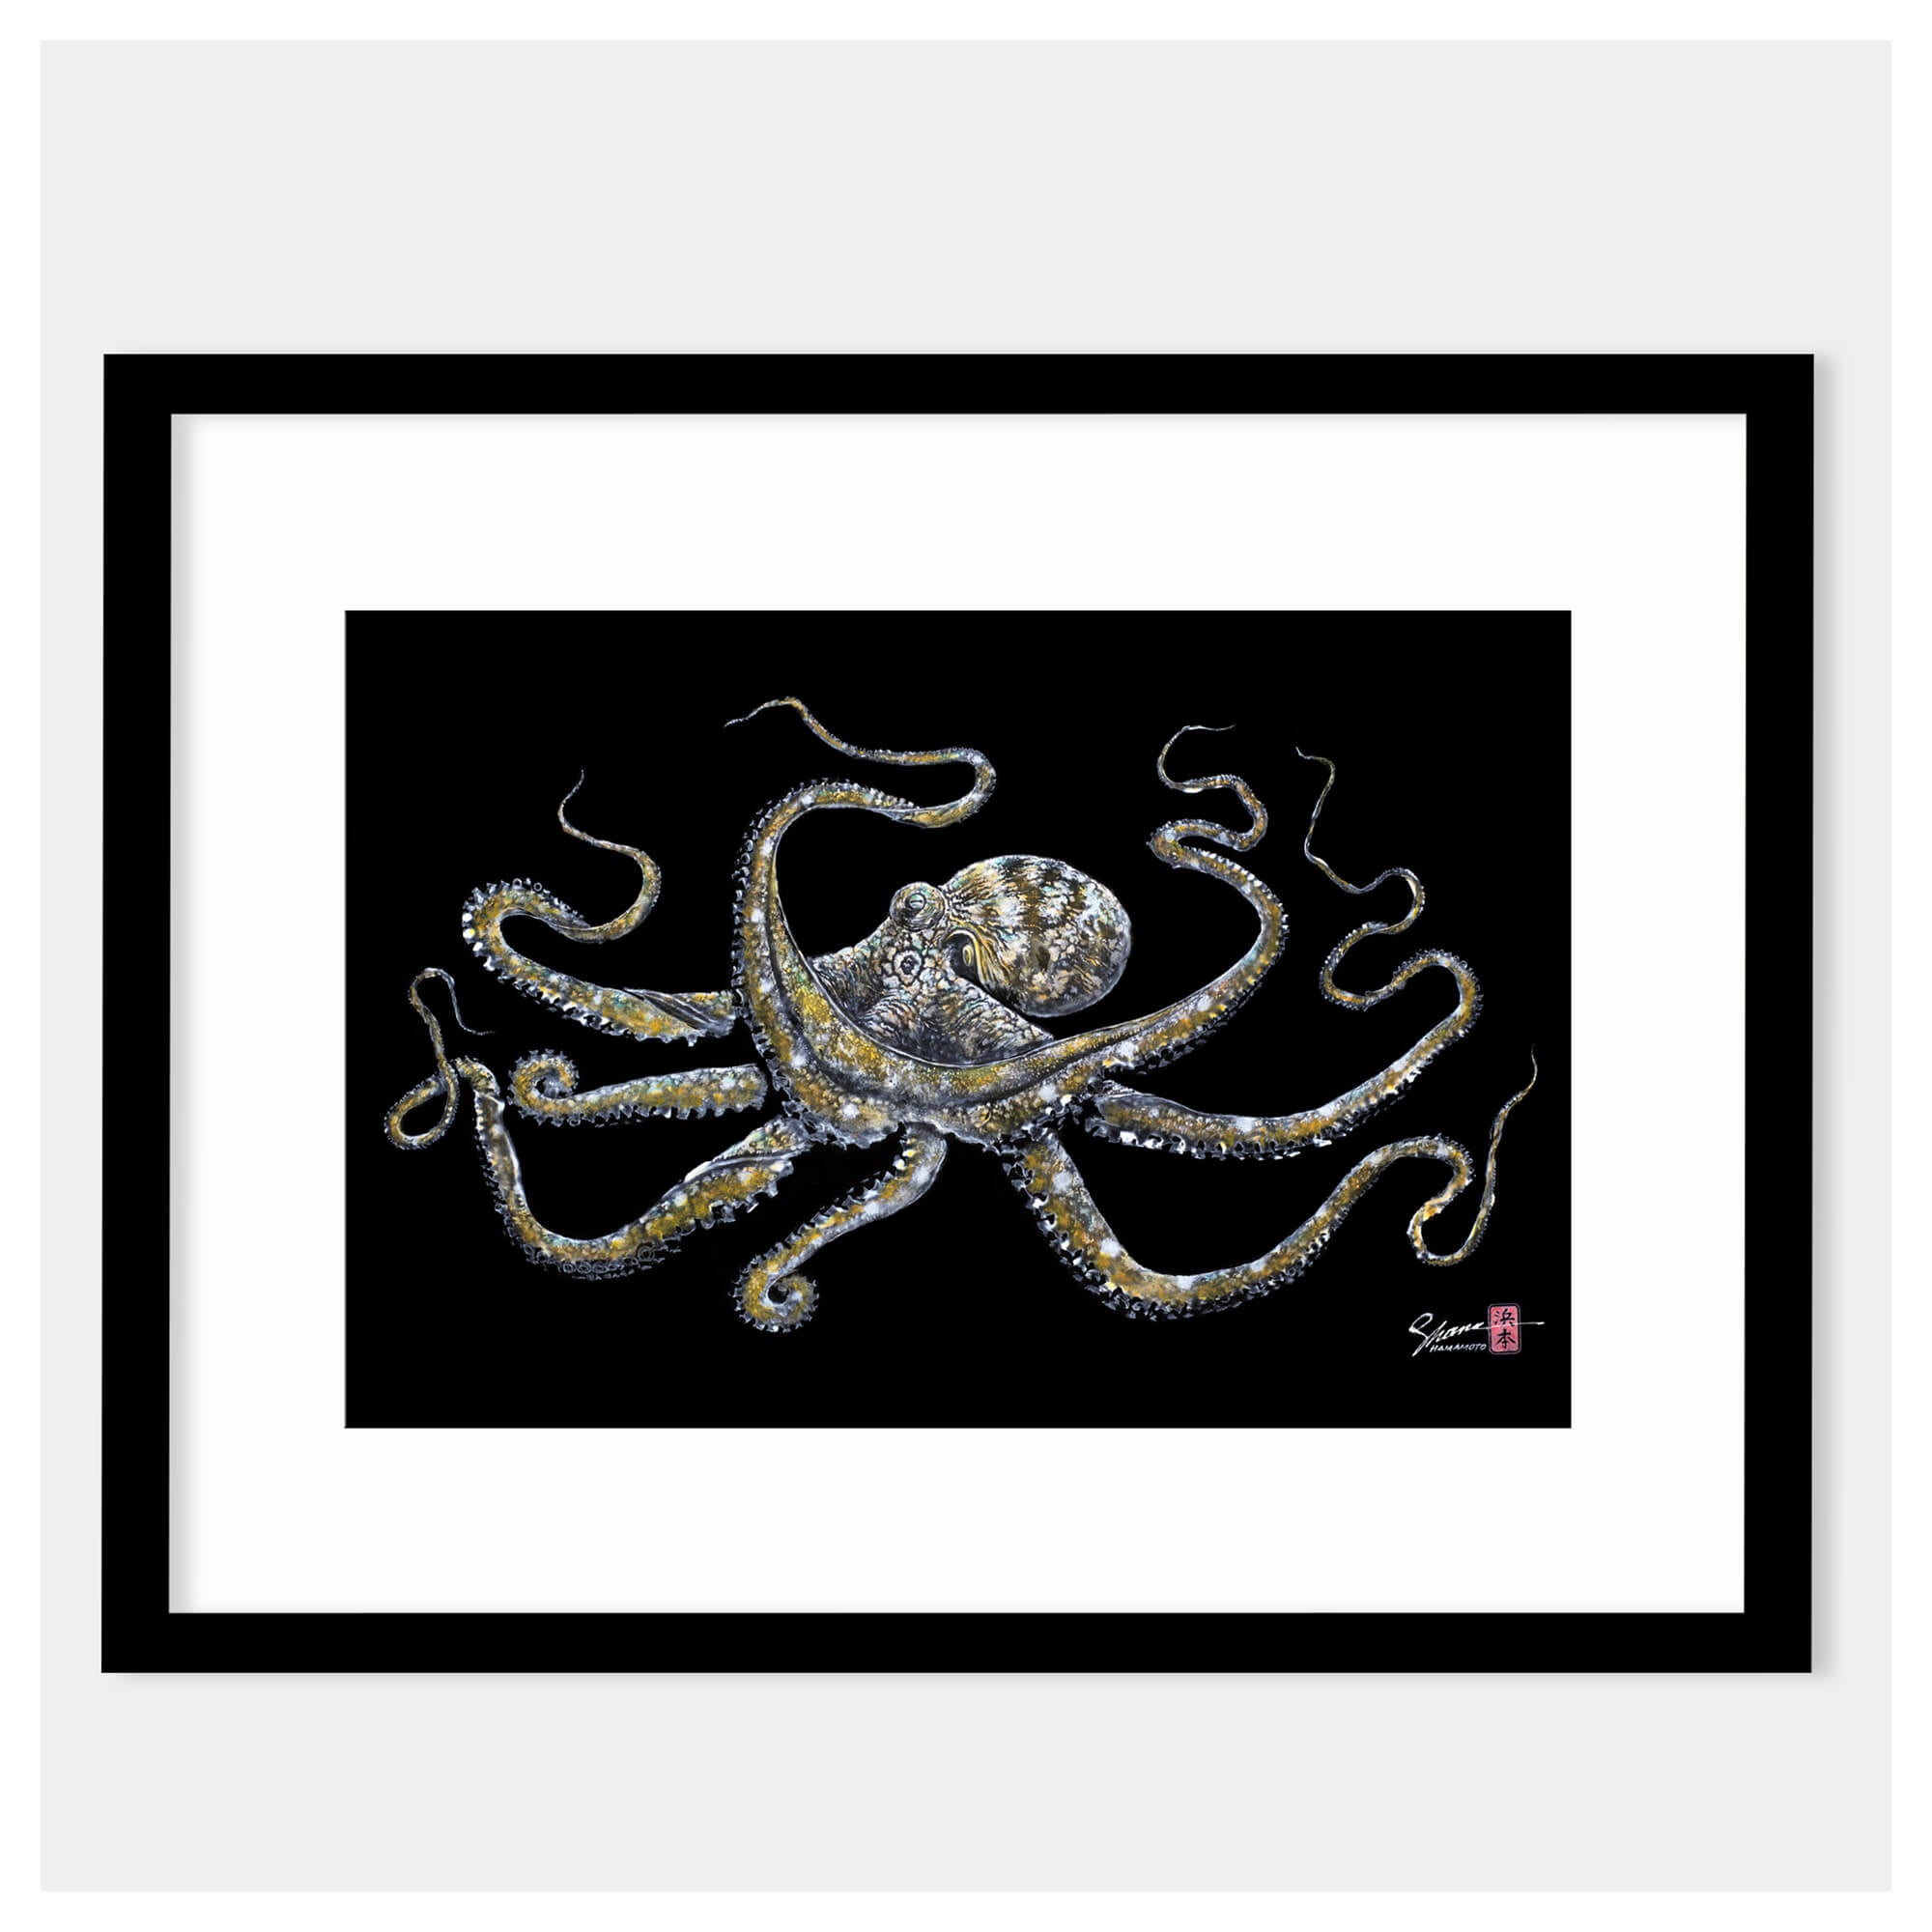 Tako (Octopus) gyotaku fish art by Hawaii artist Shane Hamamoto